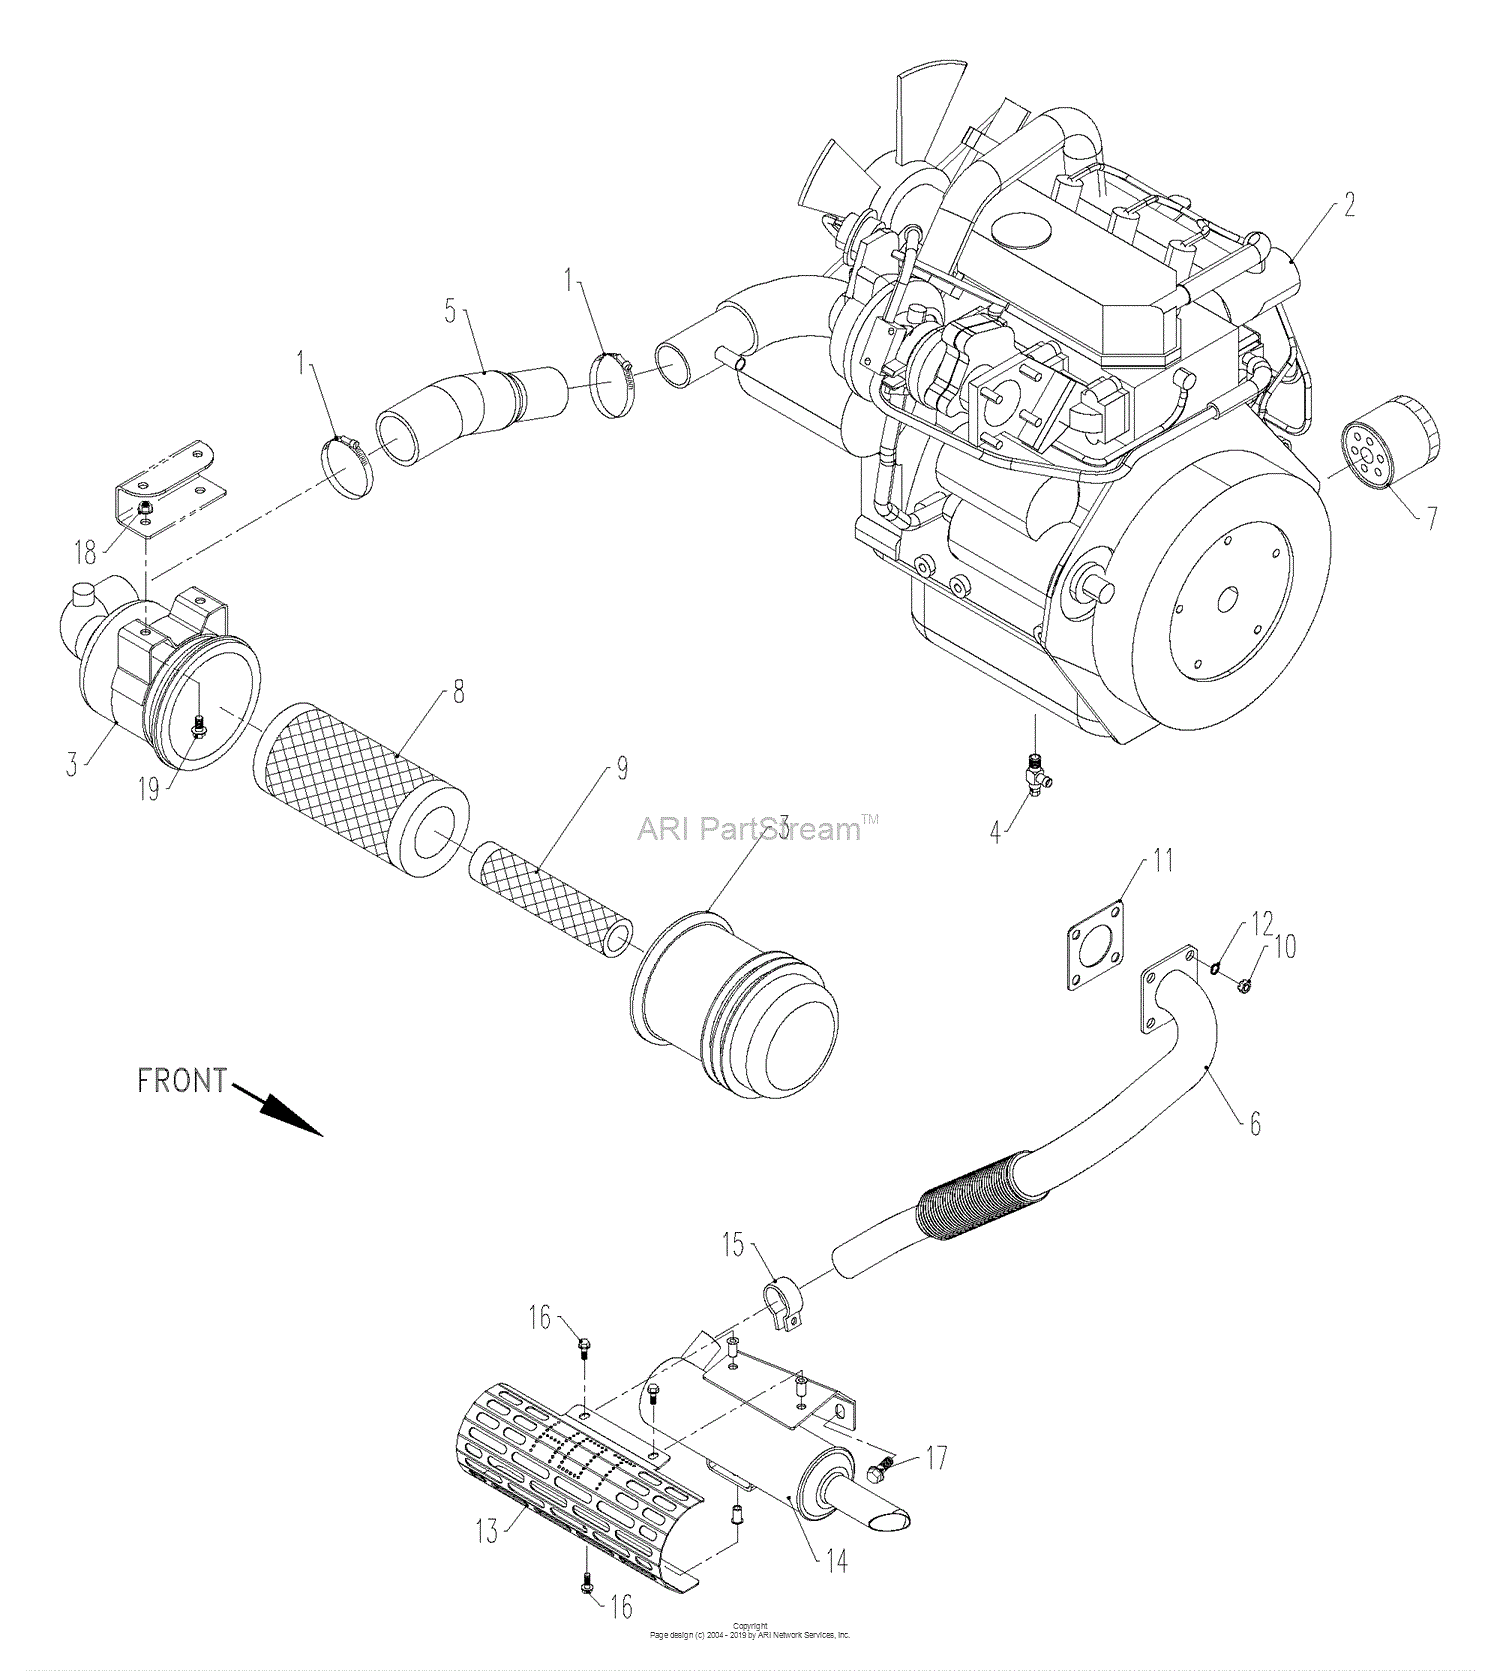 Engine Turbo Diagram Wiring Diagram & Schemas